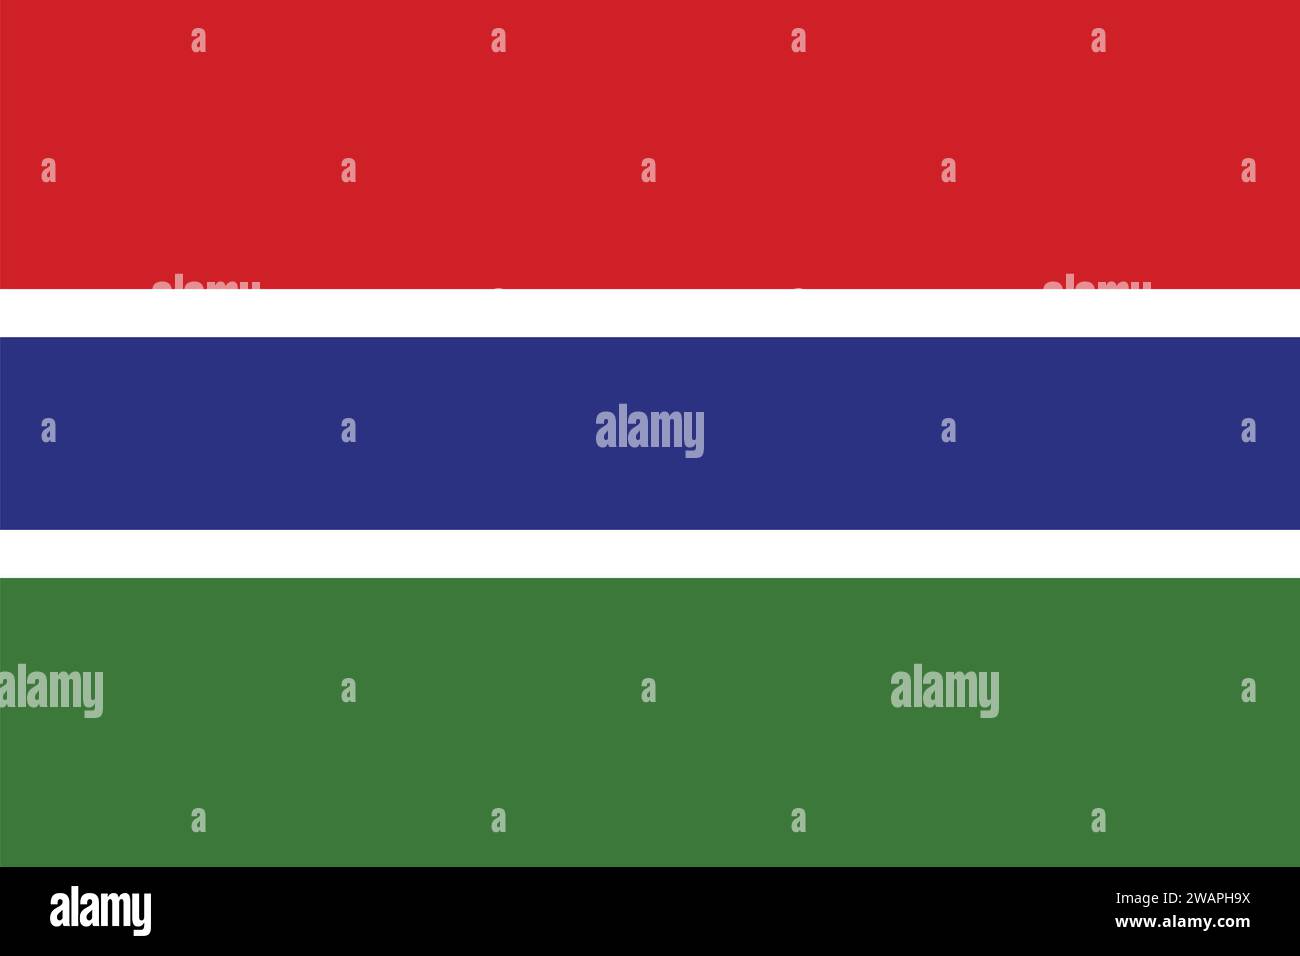 Hochdetaillierte Flagge von Gambia. Nationale Flagge Gambias. Afrika. 3D-Abbildung. Stock Vektor